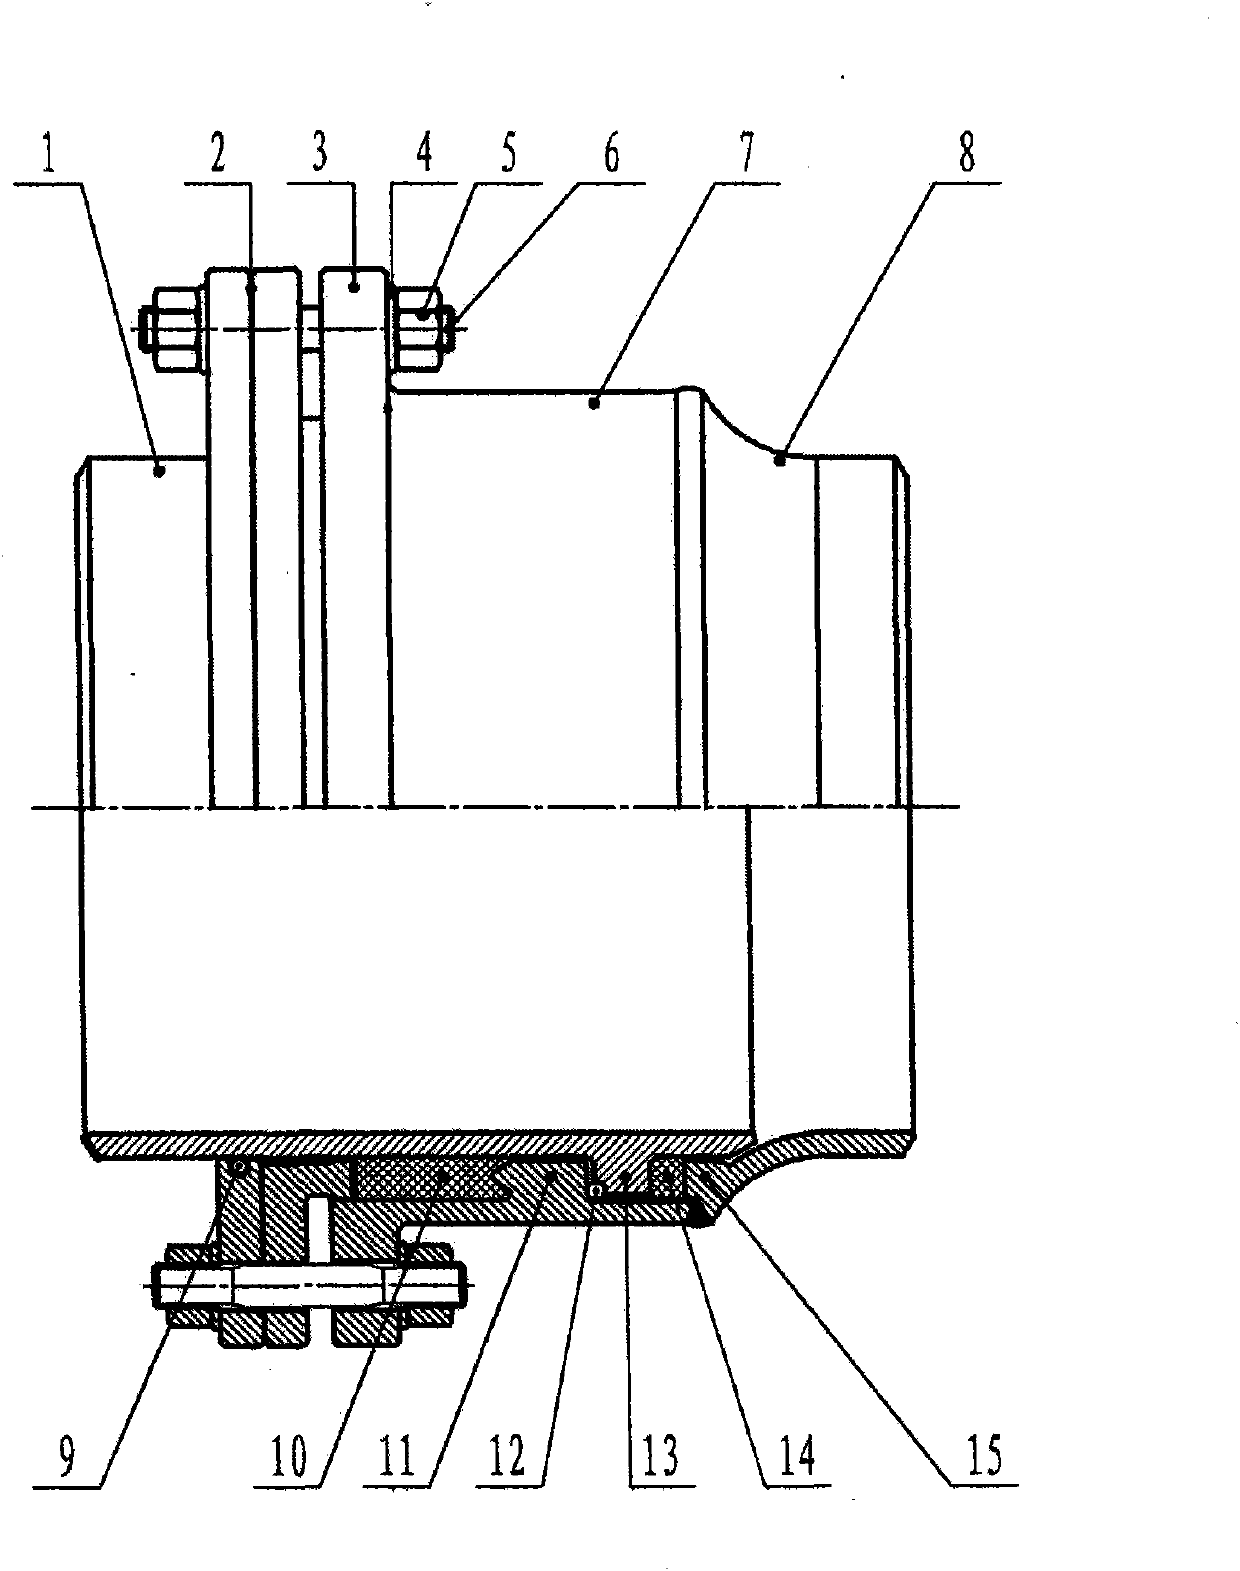 Novel double-gland high-pressure pipeline displacement compensator